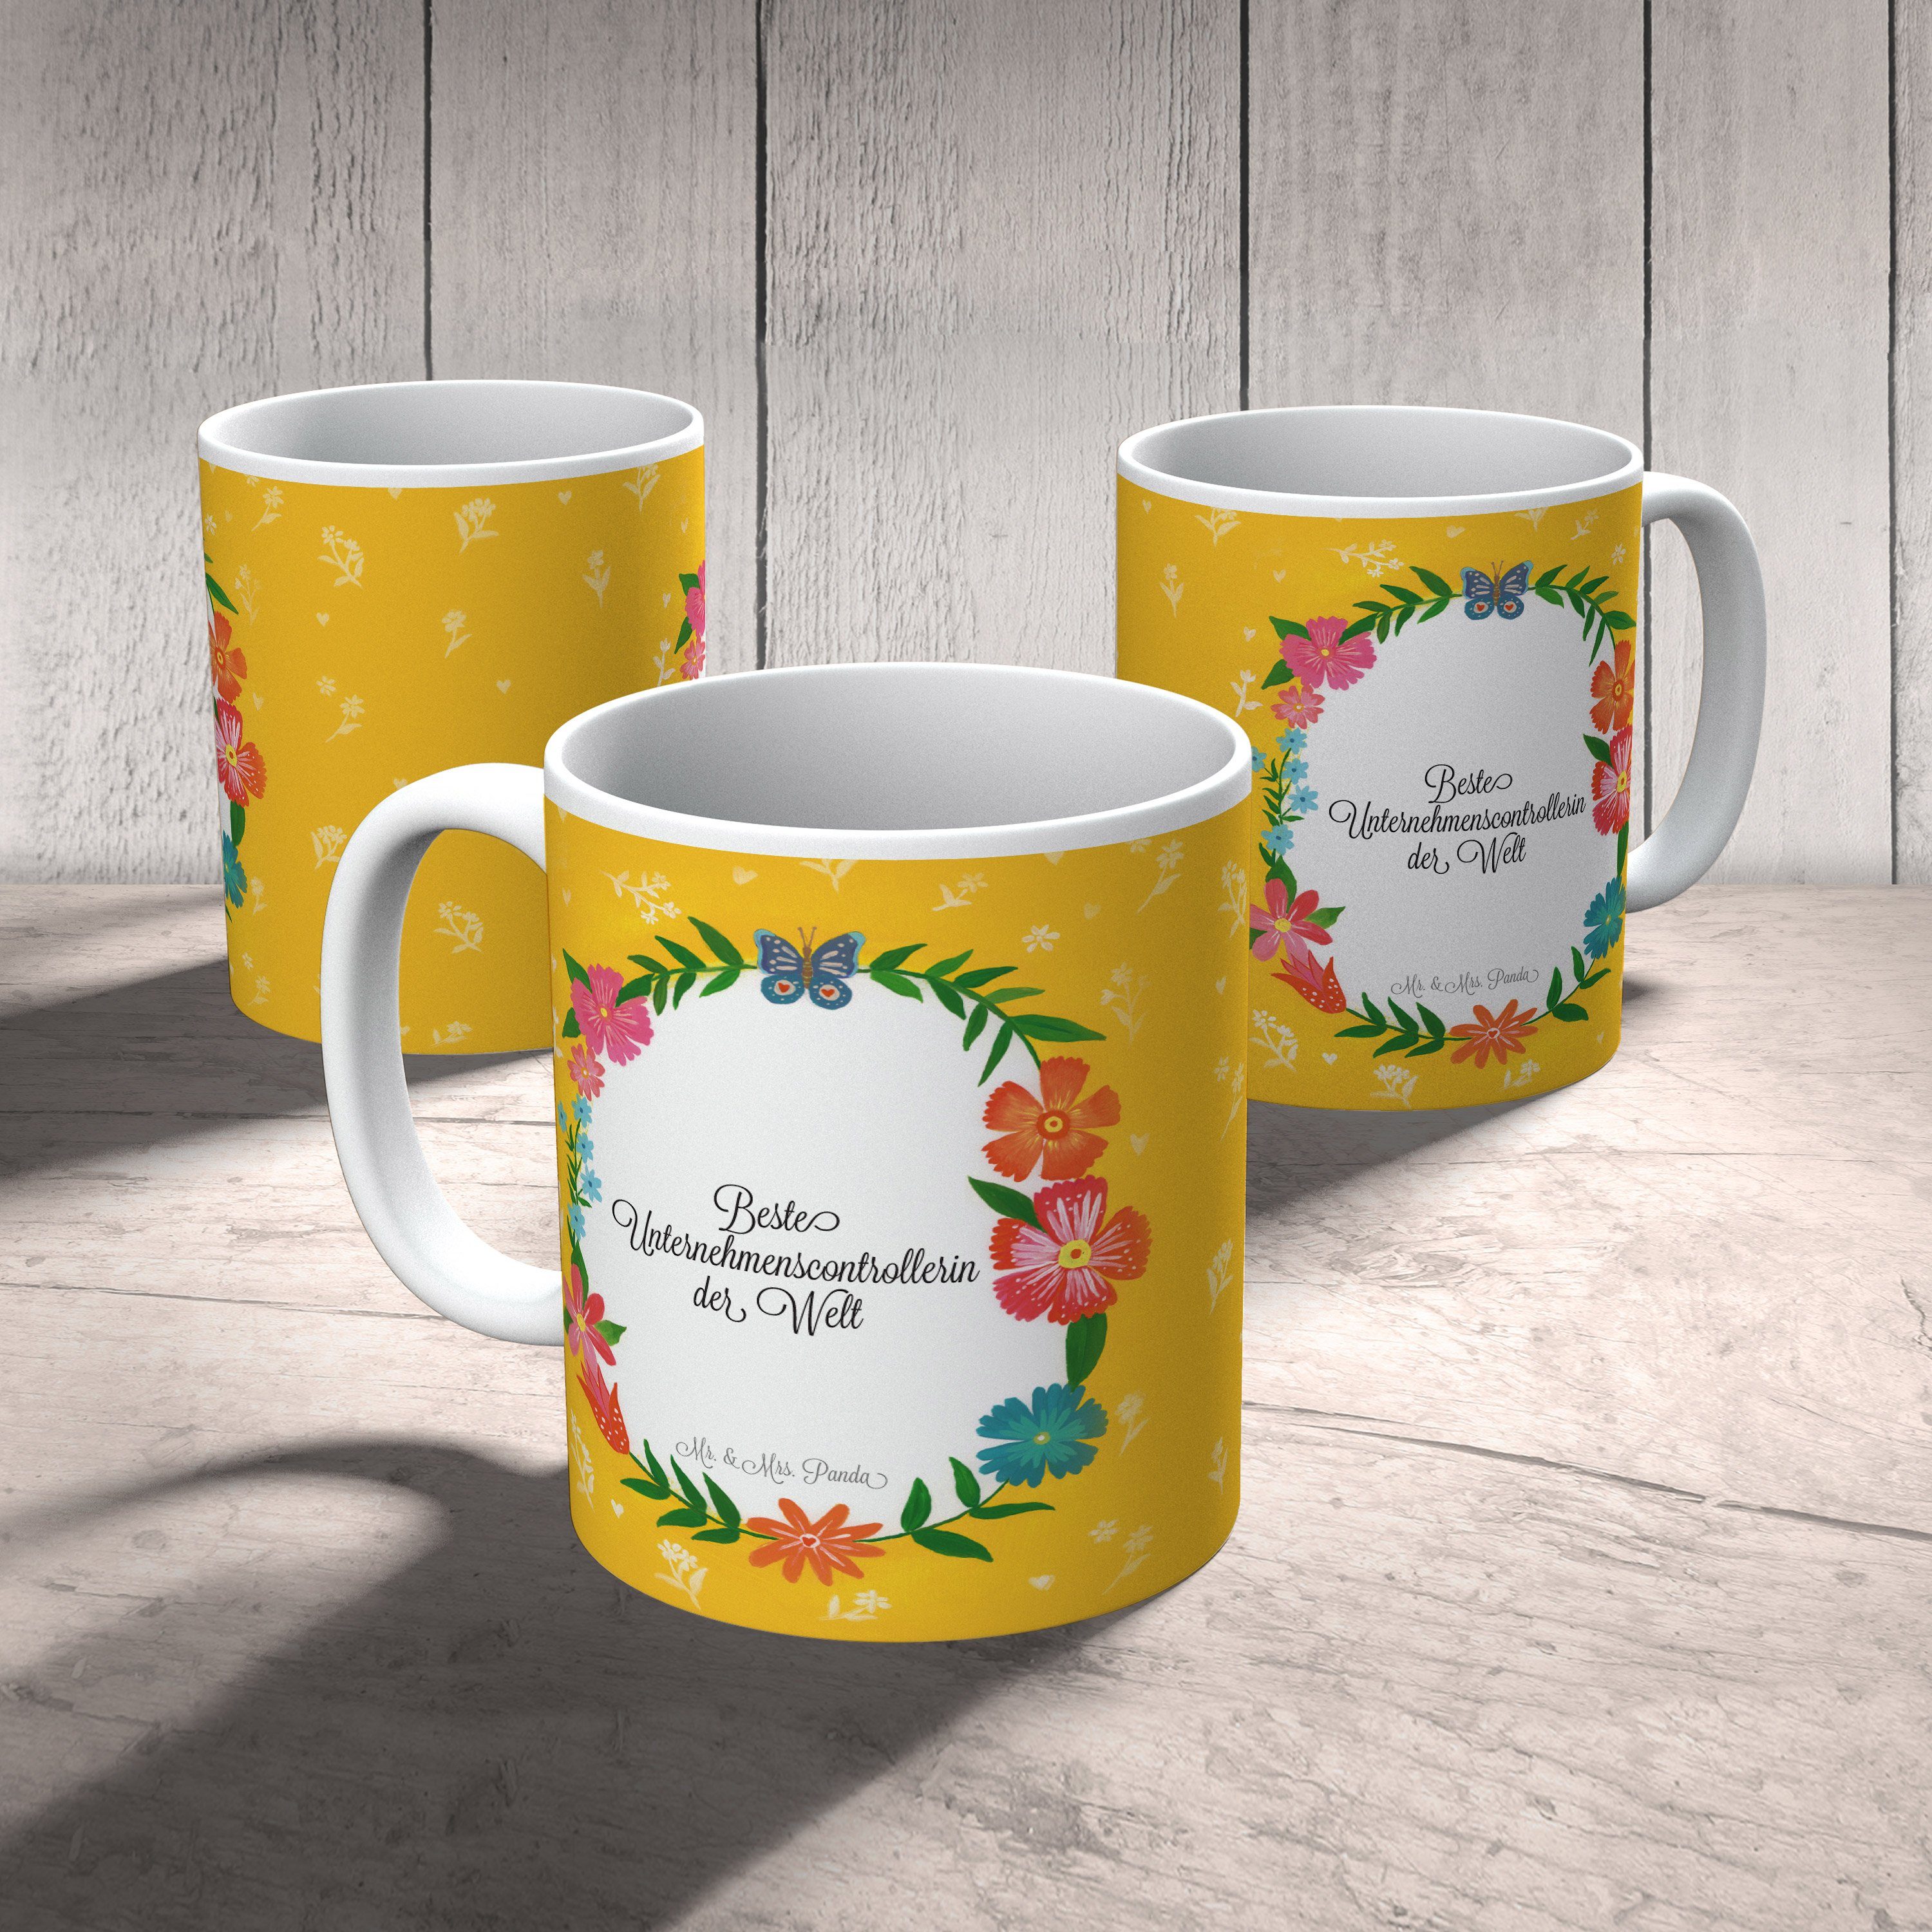 Mr. & Mrs. Panda Tasse Teetasse, Keramik Unternehmenscontrollerin - Kaffeebec, Gratulation, Geschenk